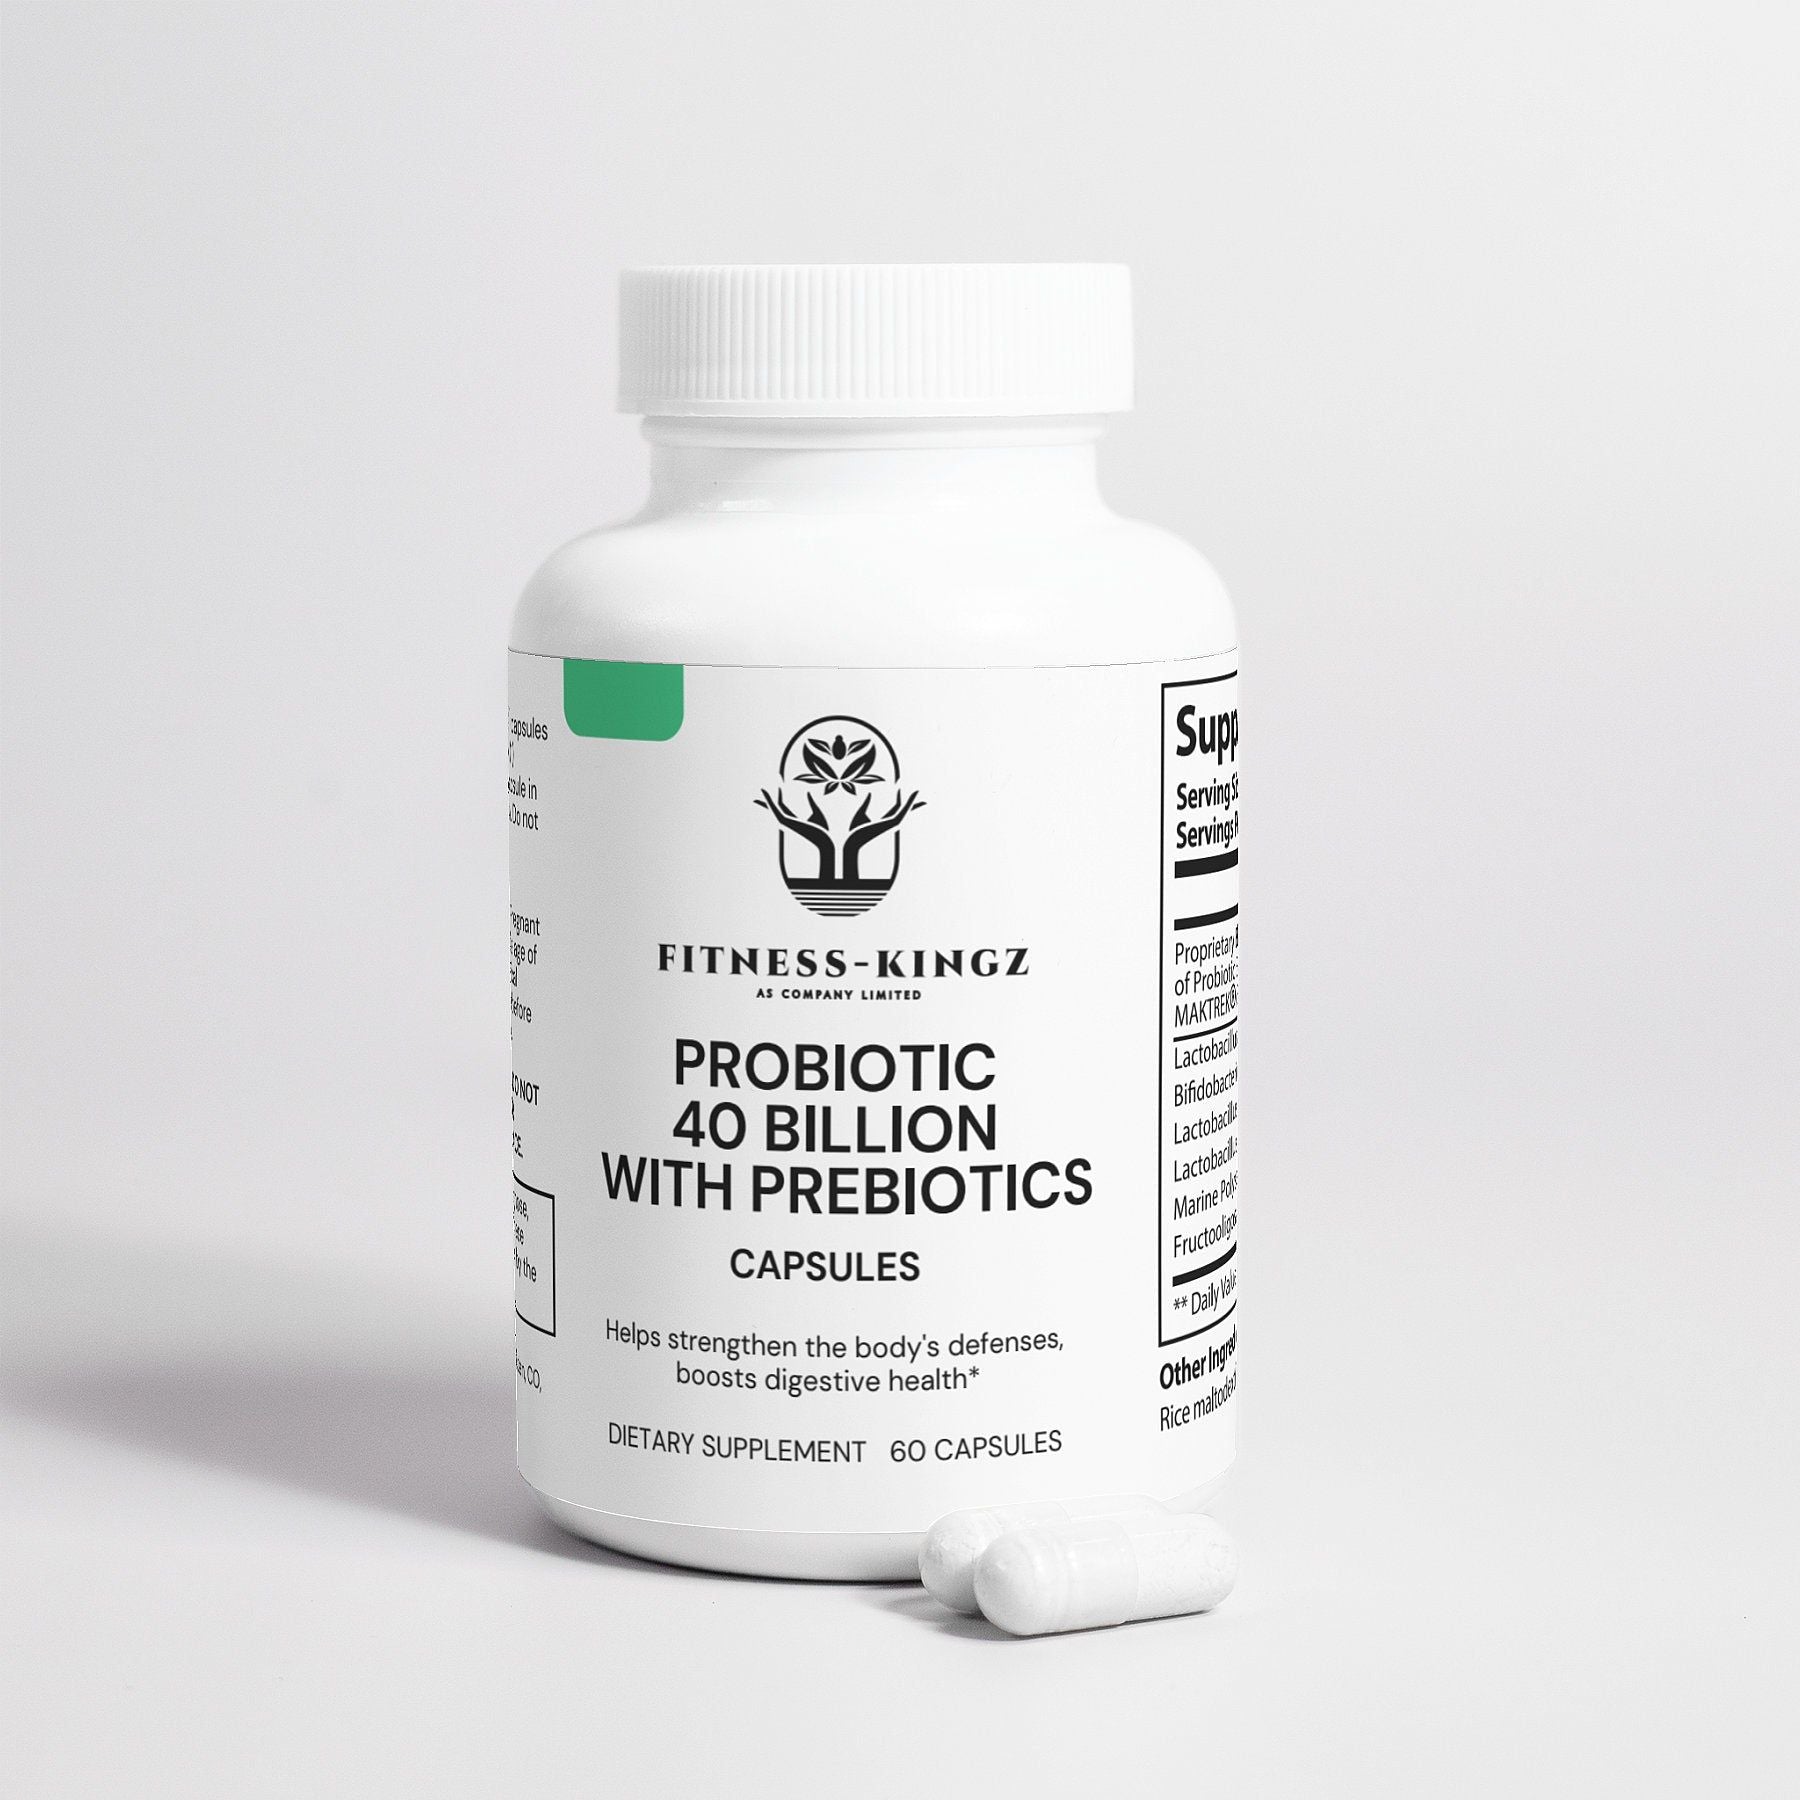 Fitness-Kingz Probiotic 40 Billion with Prebiotics